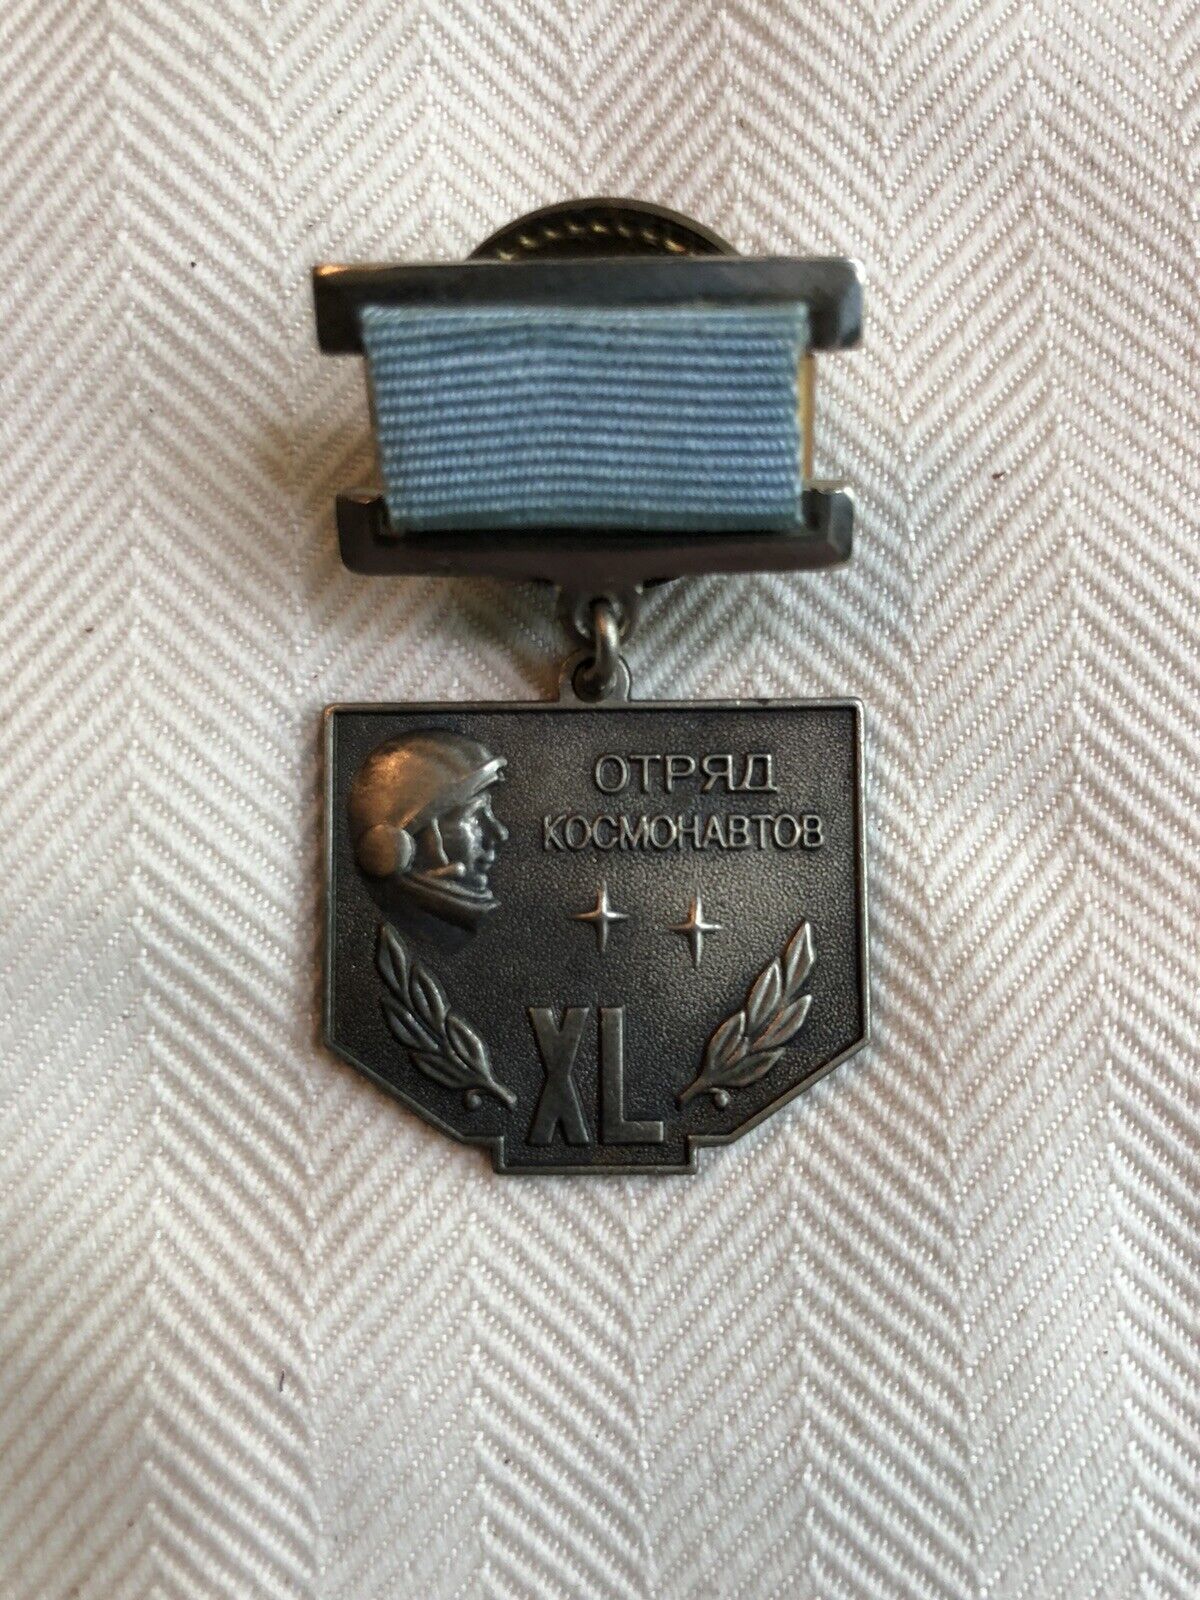 VERY RARE Russian USSR badge medal  ::  Soviet Cosmonauts Unit  1960- 2000